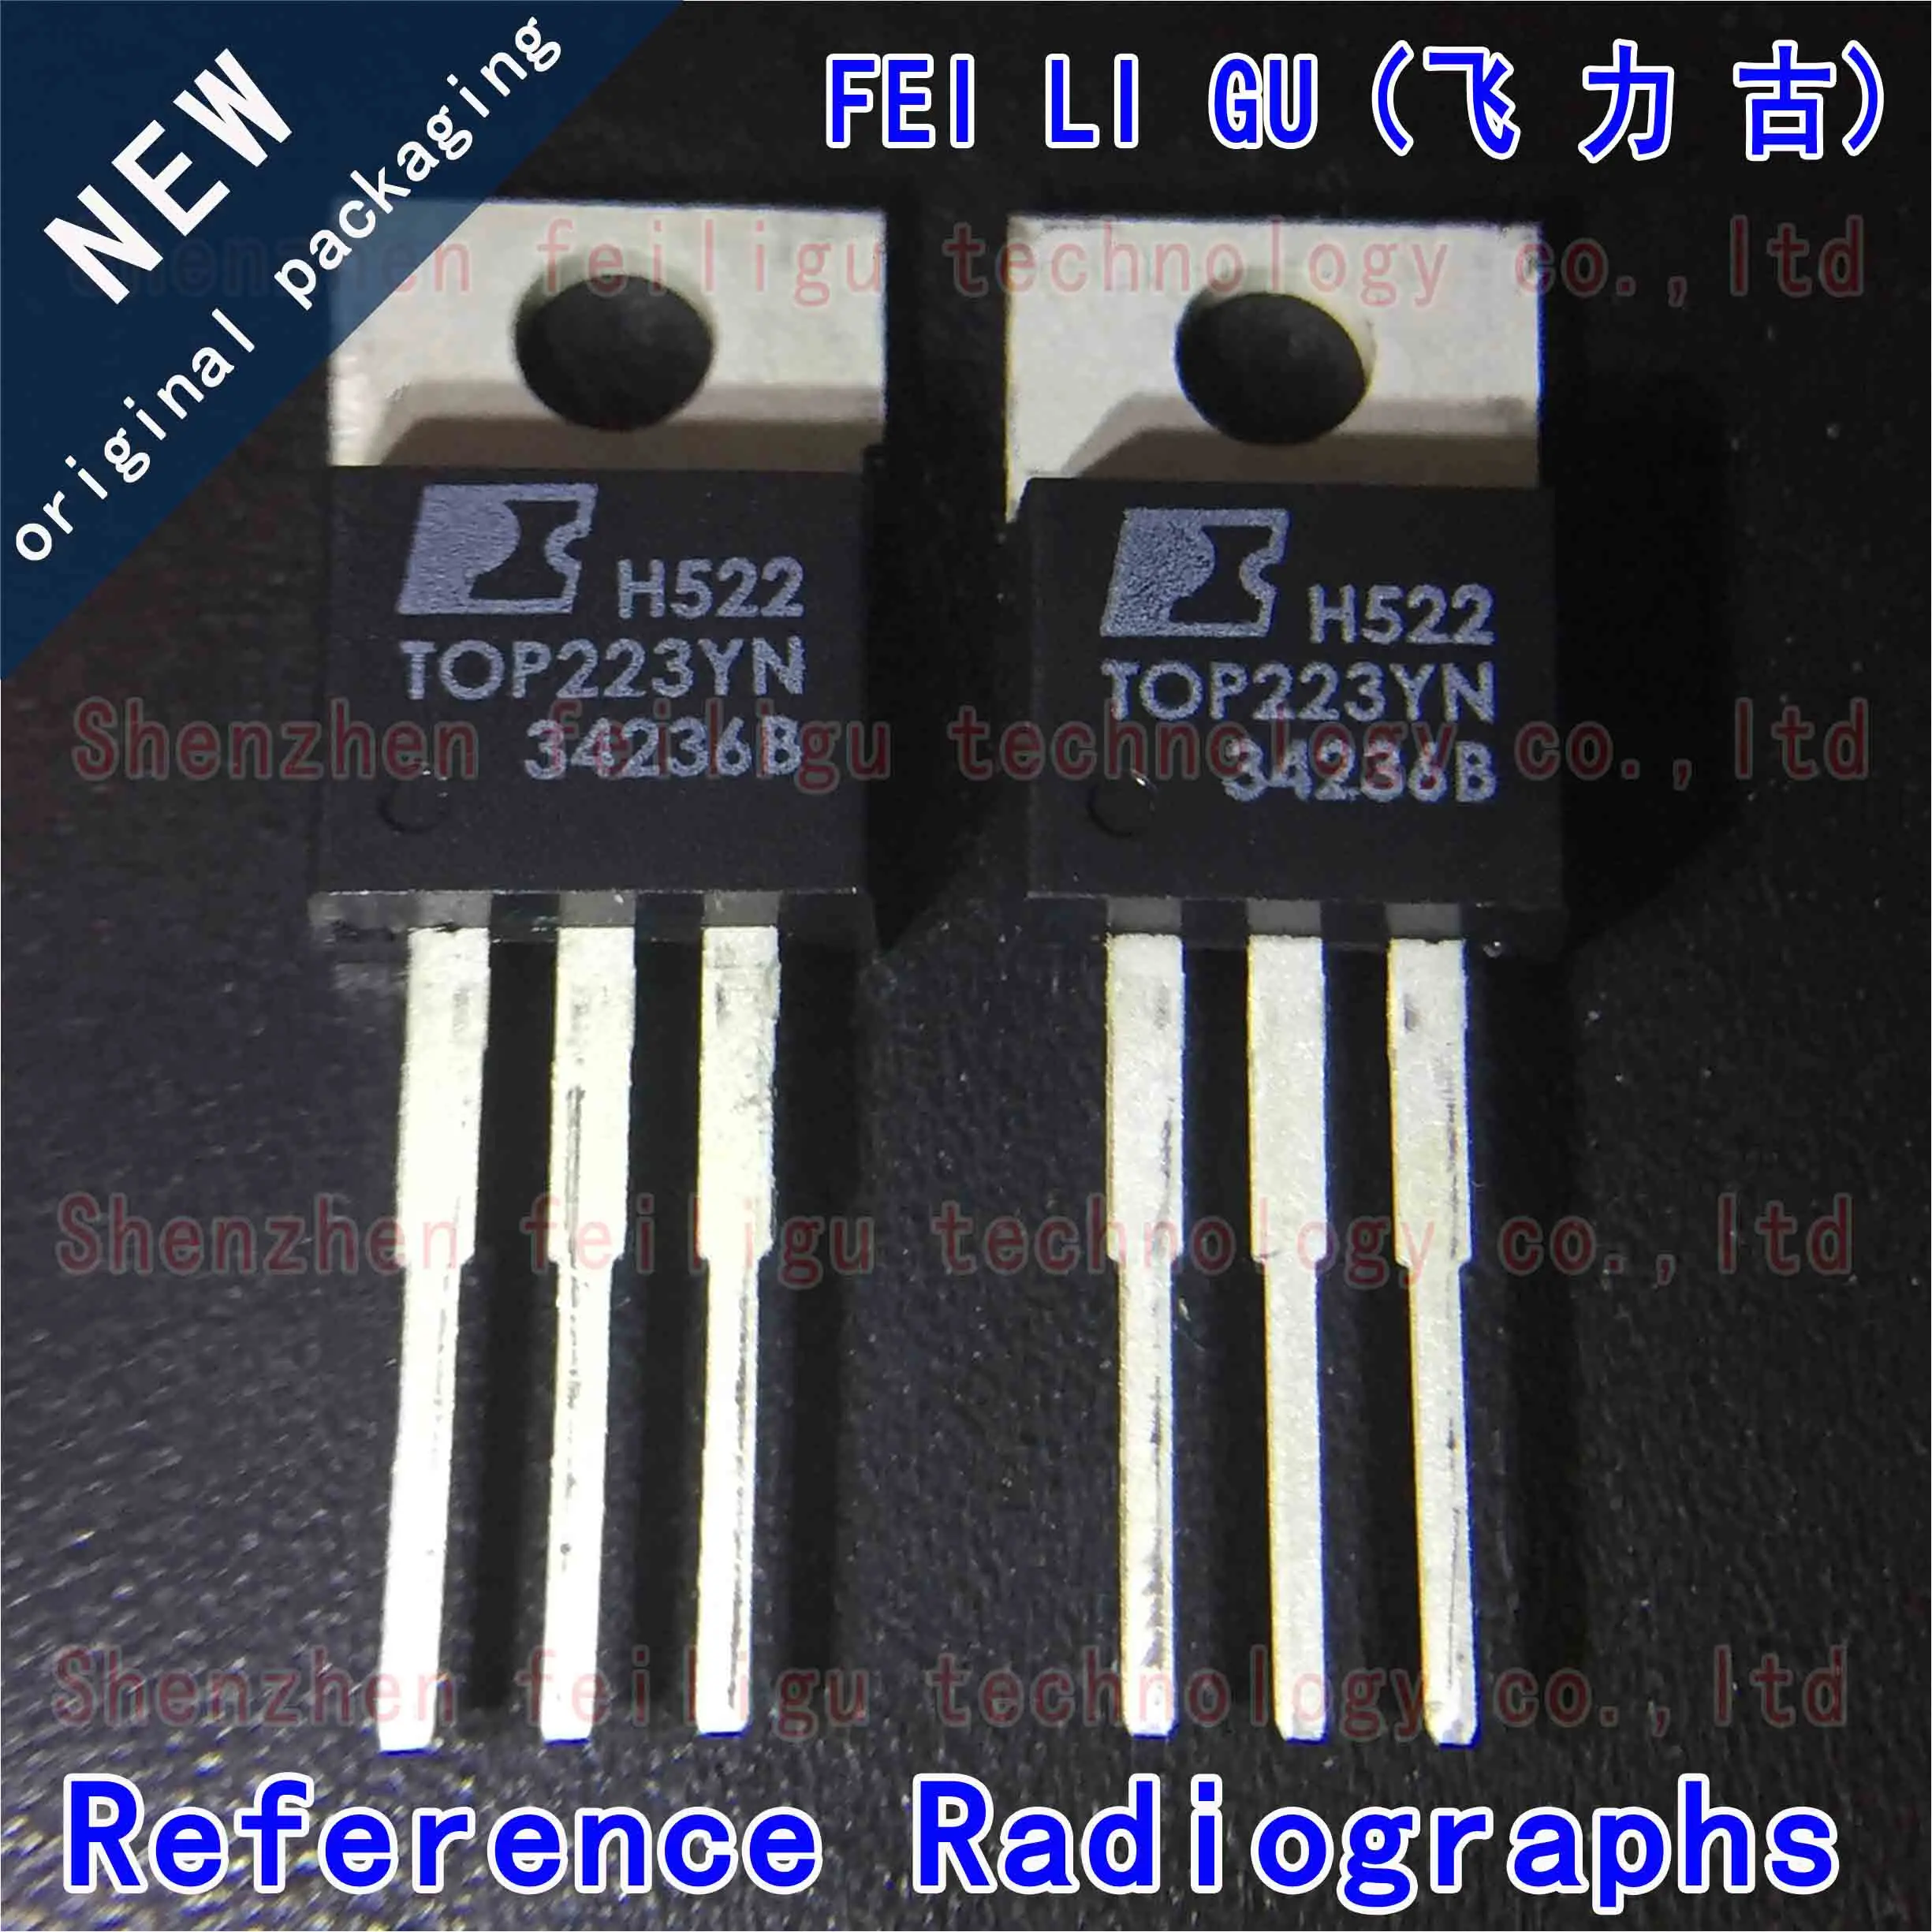 1~30PCS 100% New original TOP223YN TOP223 package:TO-220 plug AC-DC controller voltage regulator power management chip tps2491dgsr bix msop 10 hot plug controller chip new original stock